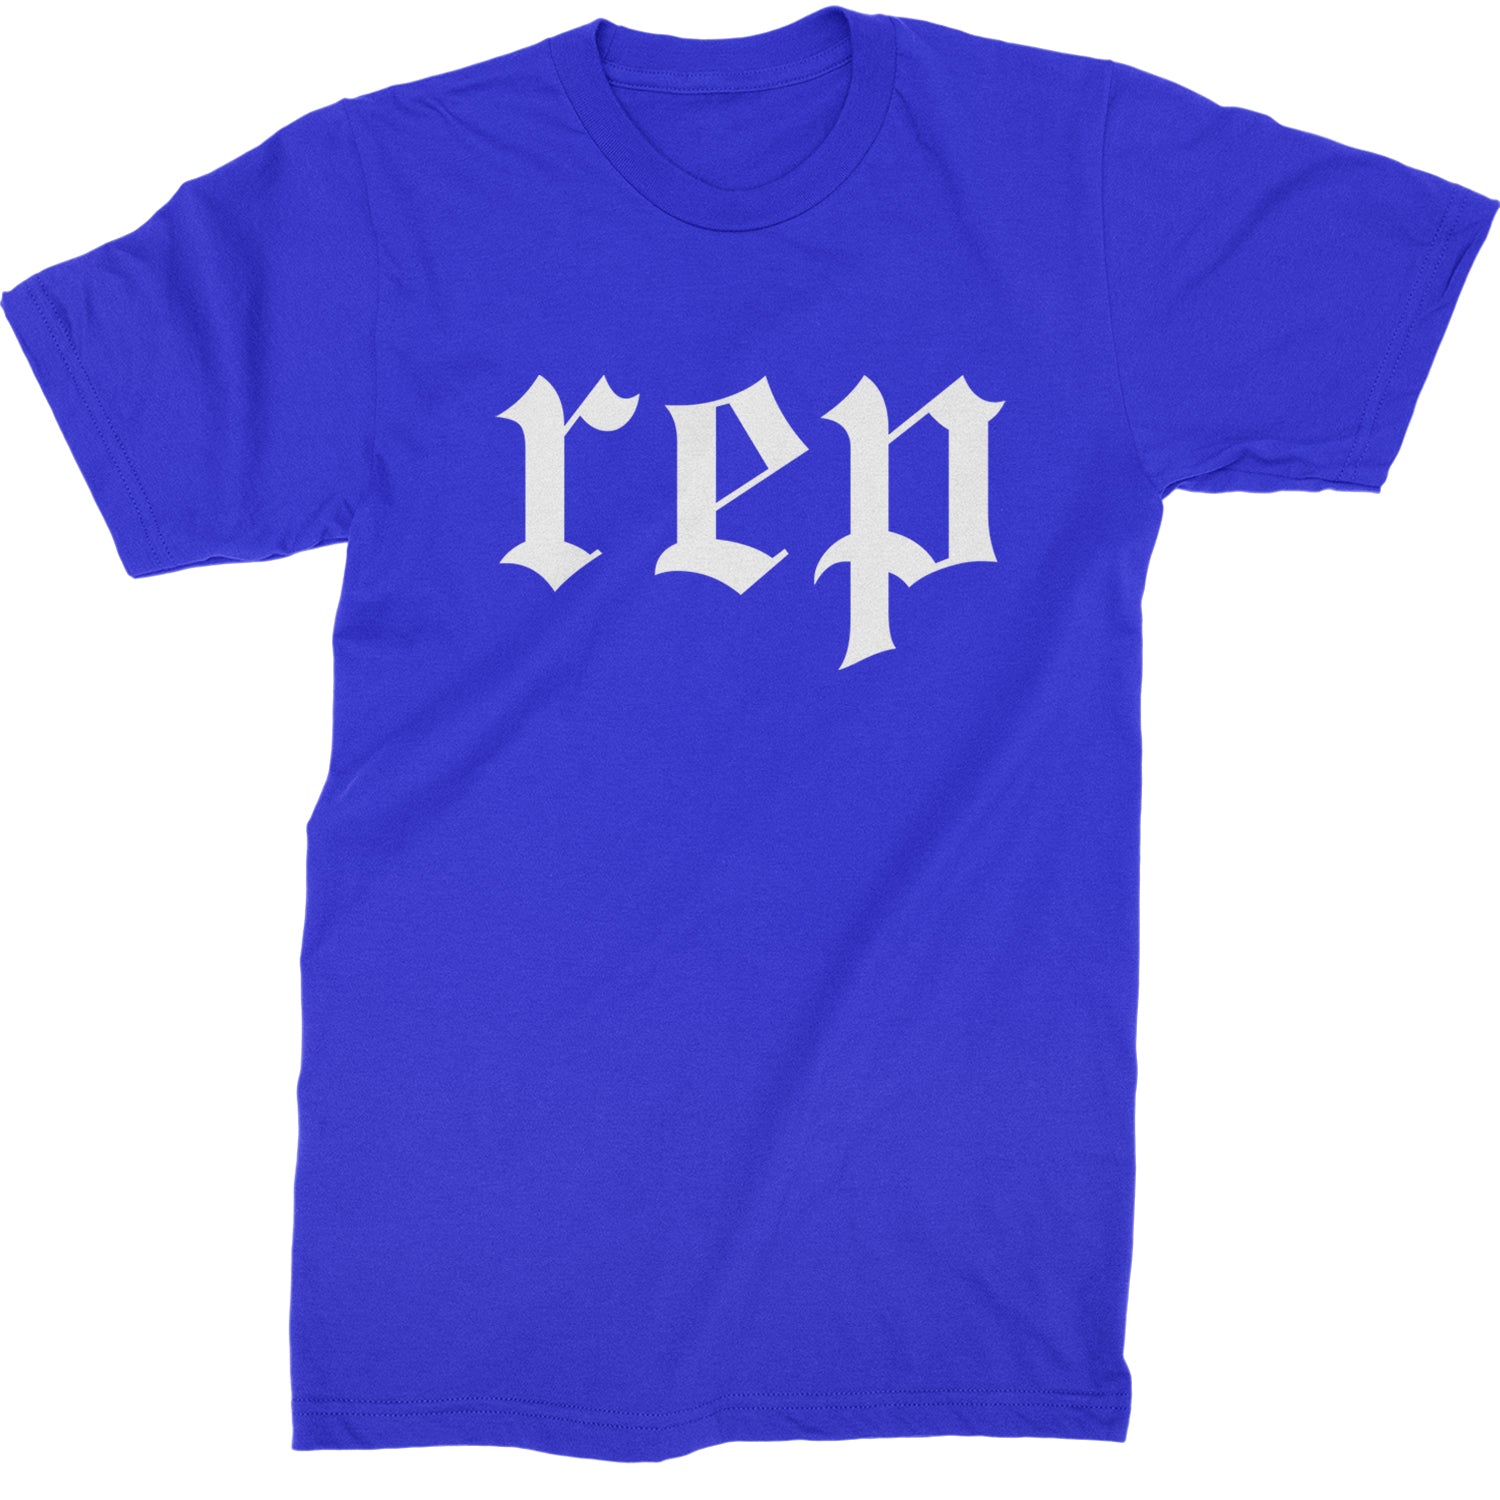 REP Reputation Eras Music Lover Gift Fan Favorite Mens T-shirt Royal Blue